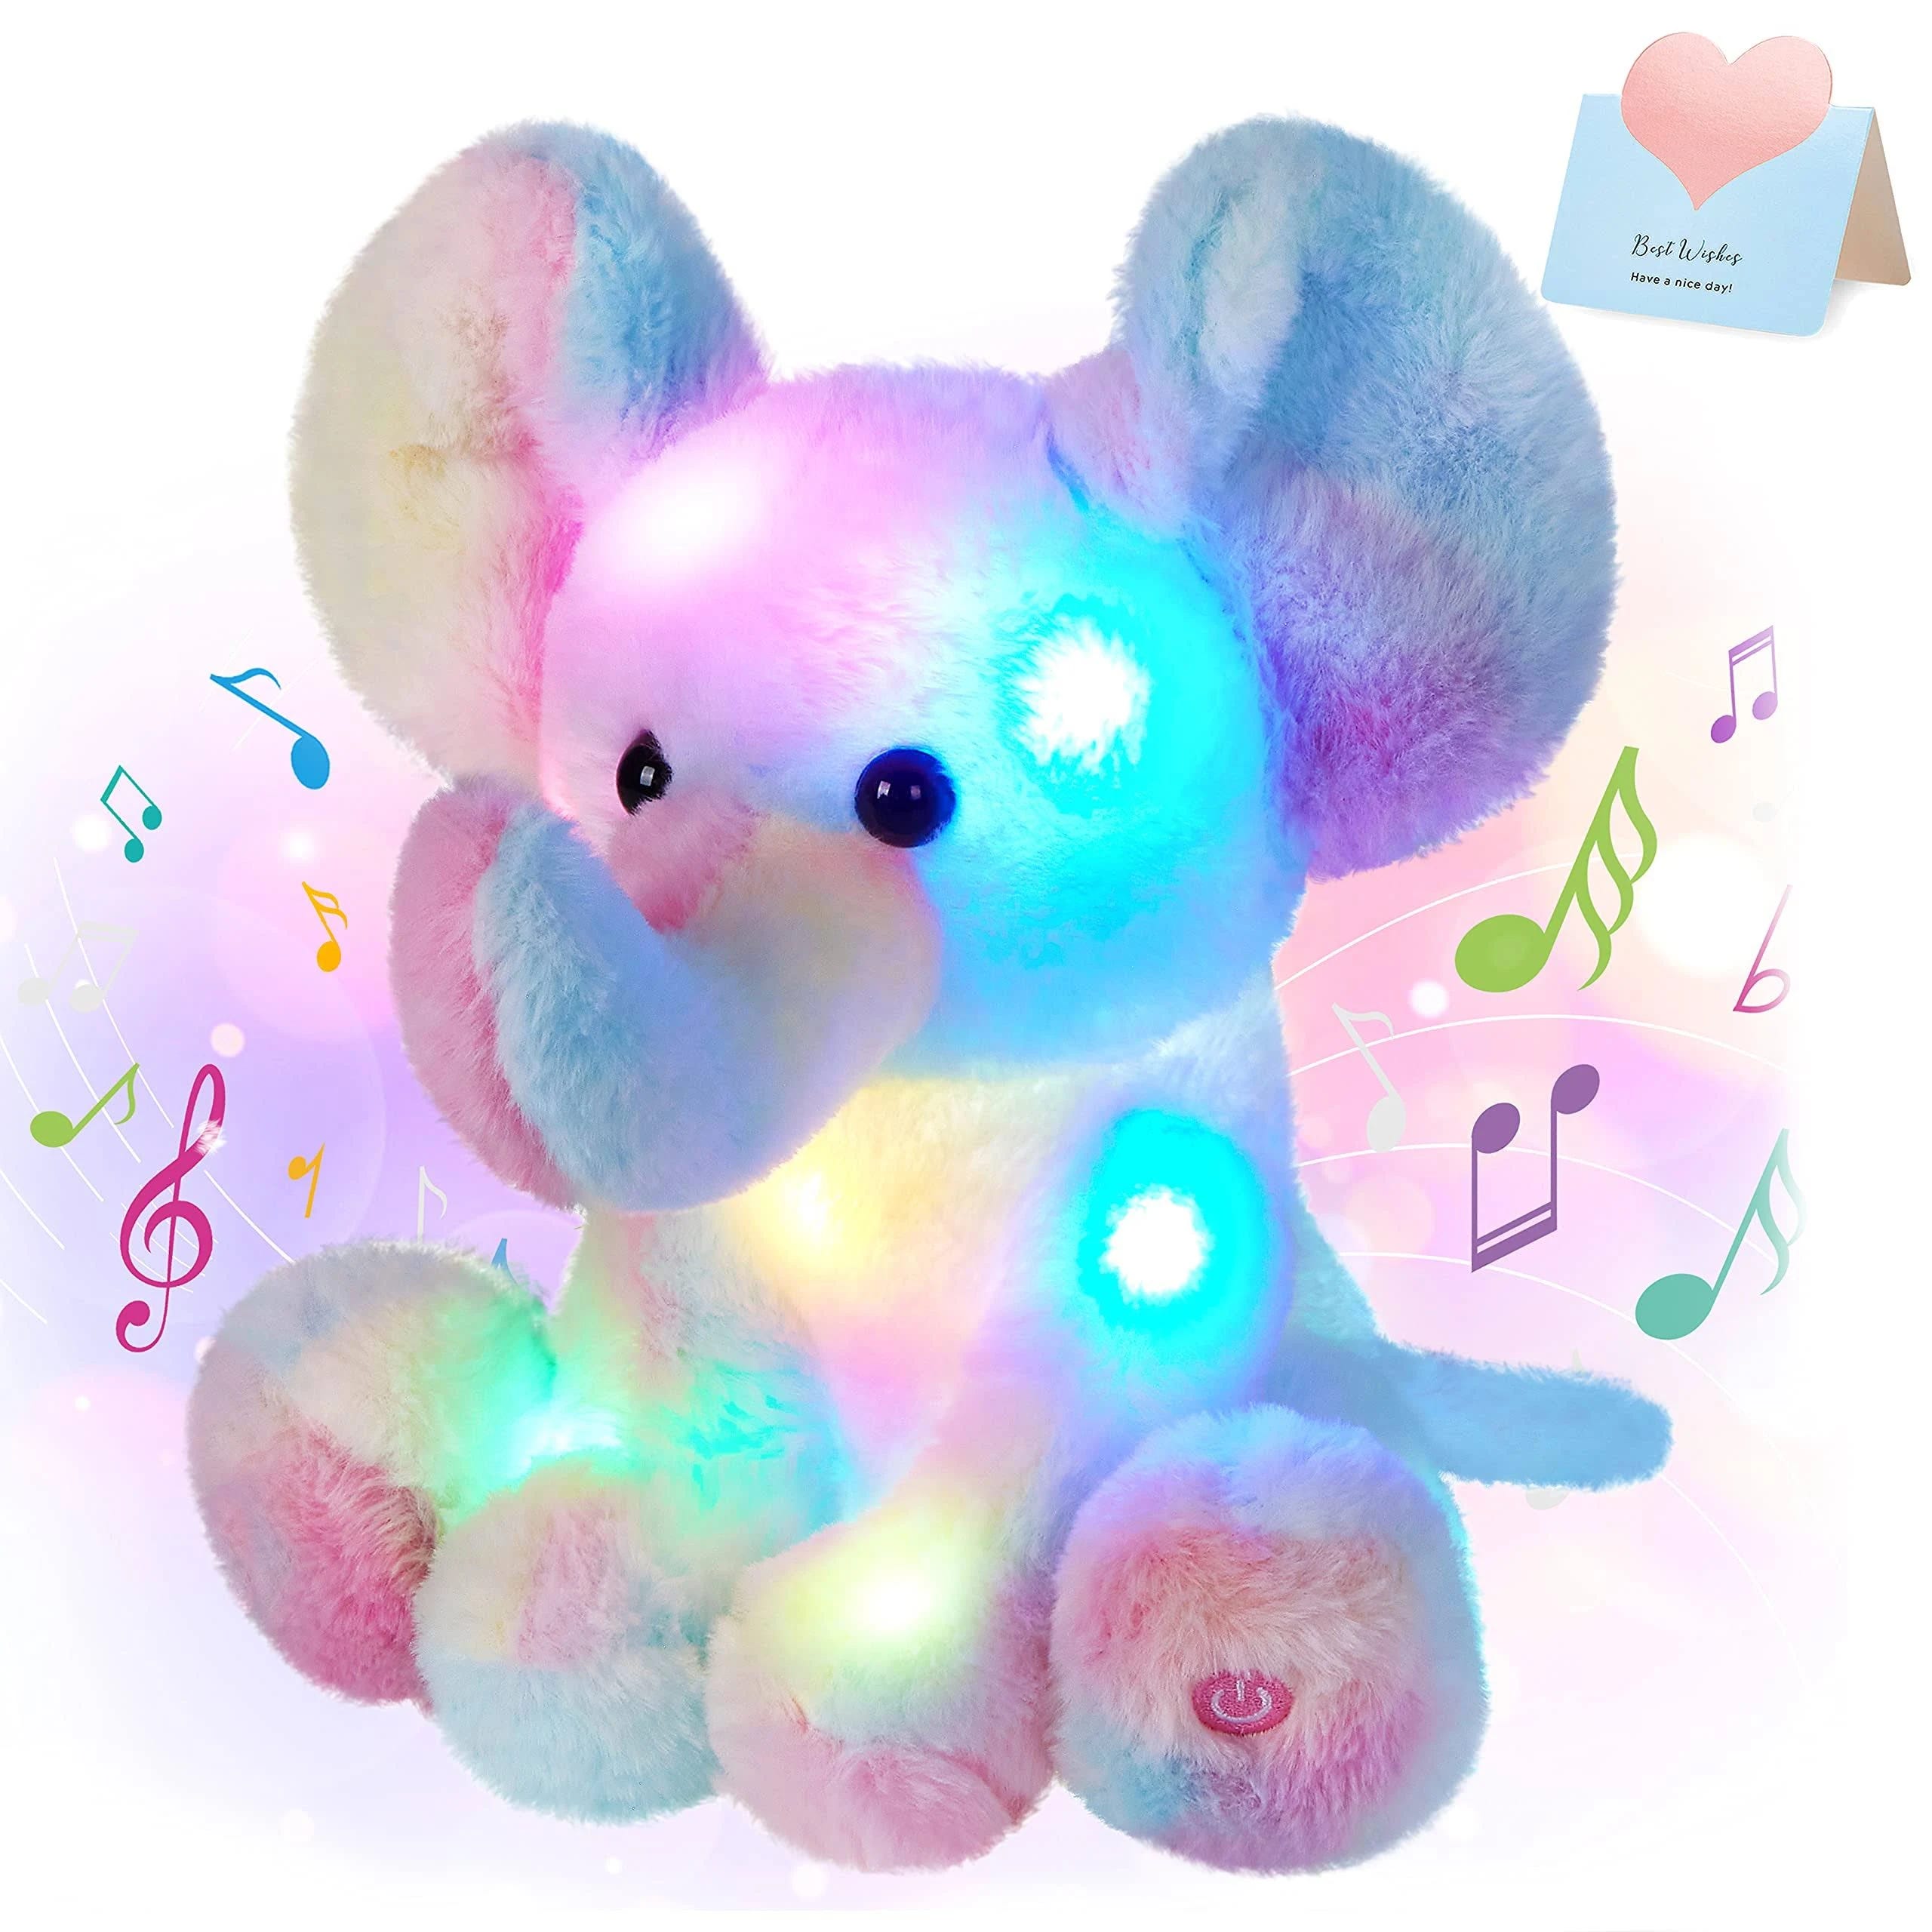 Rainbow Glowing Elephant Stuffed Toy with 10 Lullabies | Image